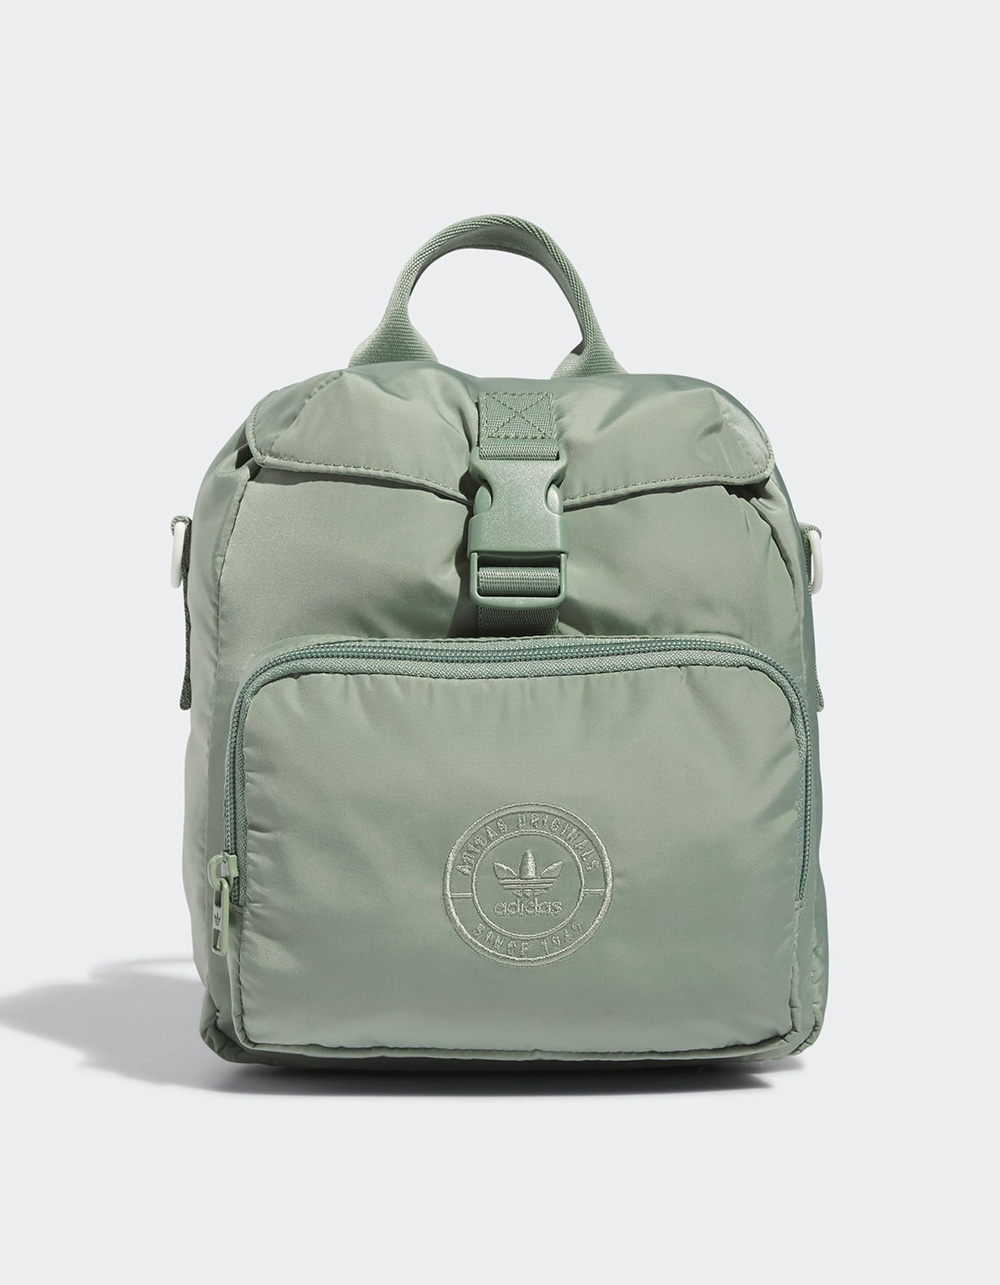 Urban Outfitters Adidas Mini 2 Ways To Wear Mini Backpack/ Cross Body Bag